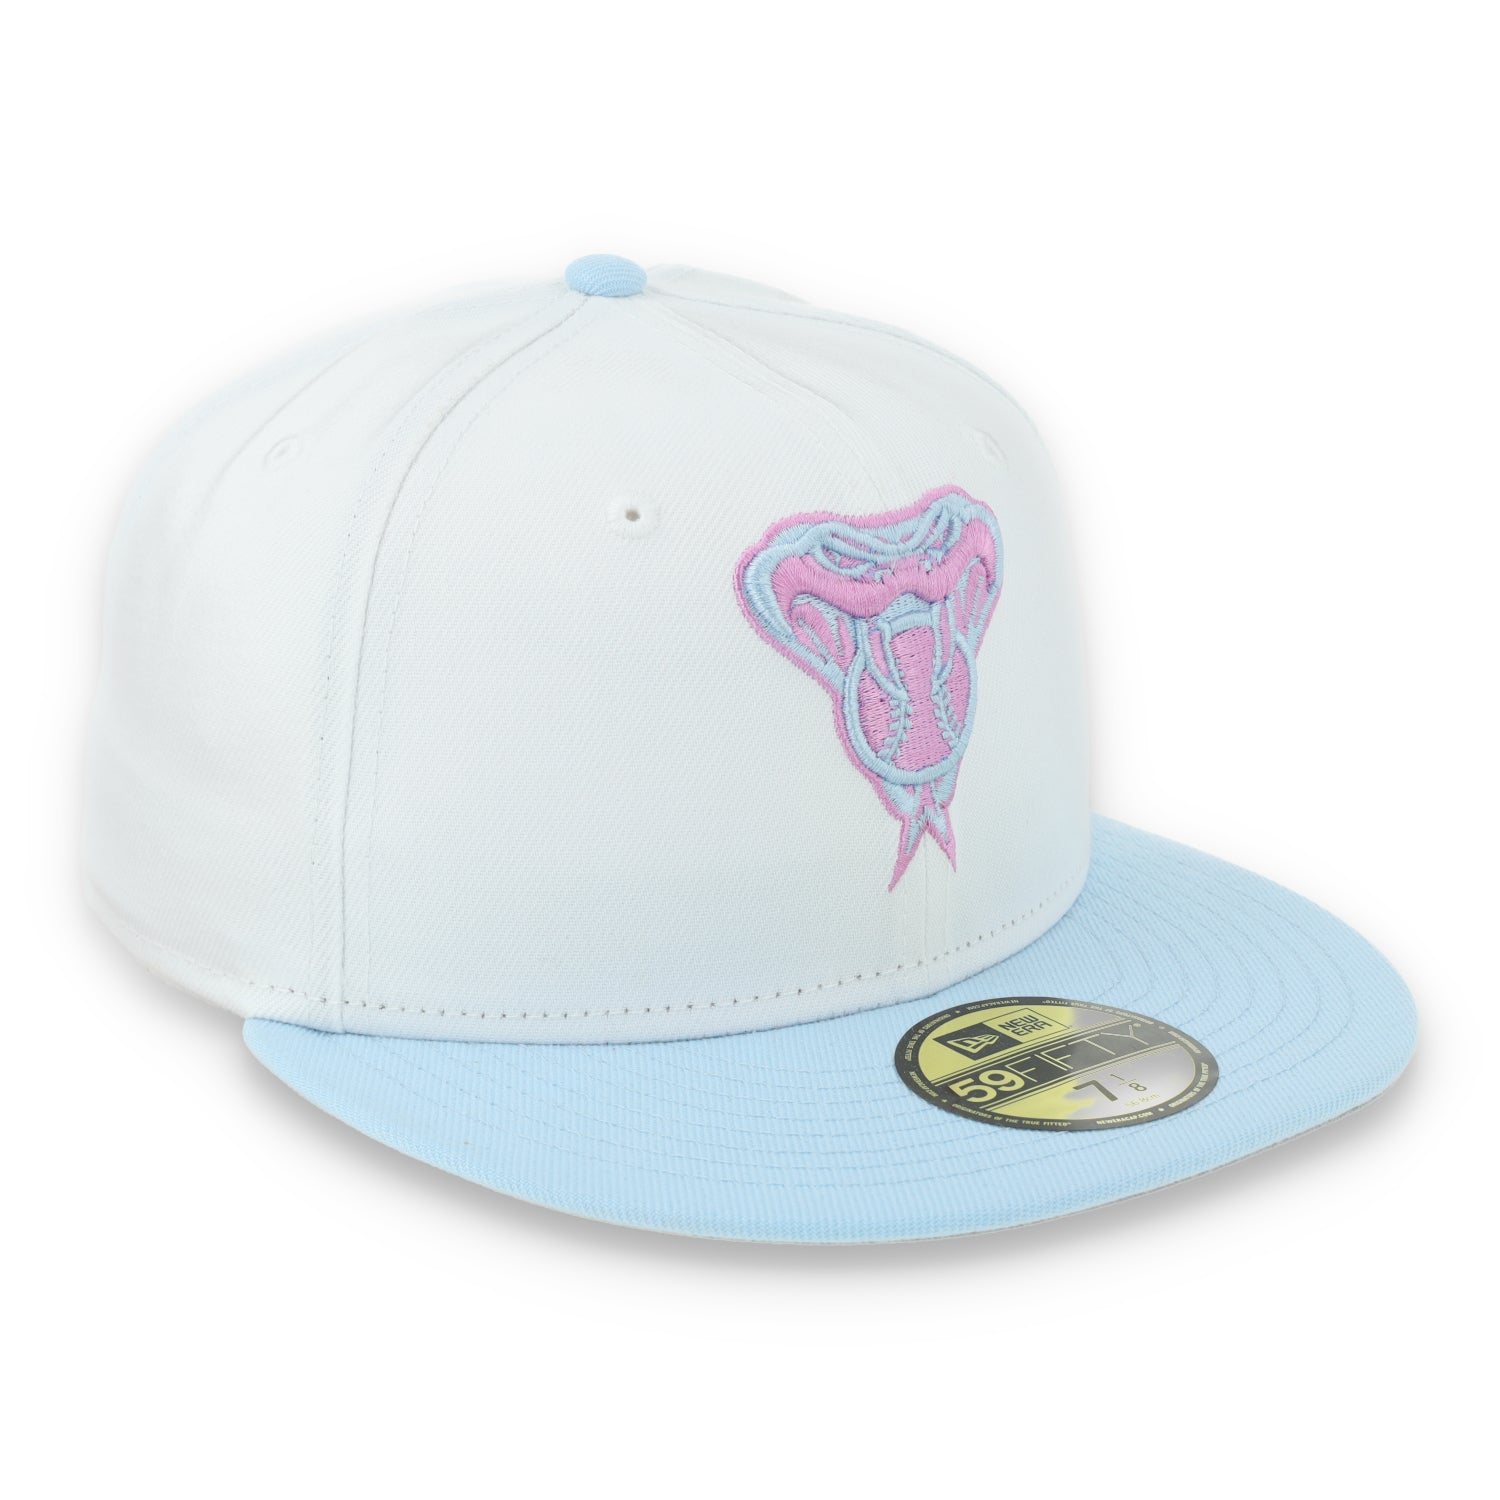 New Era Arizona Diamondbacks Color Pack 59FIFTY Fitted Hat-White/Light Blue /Pink